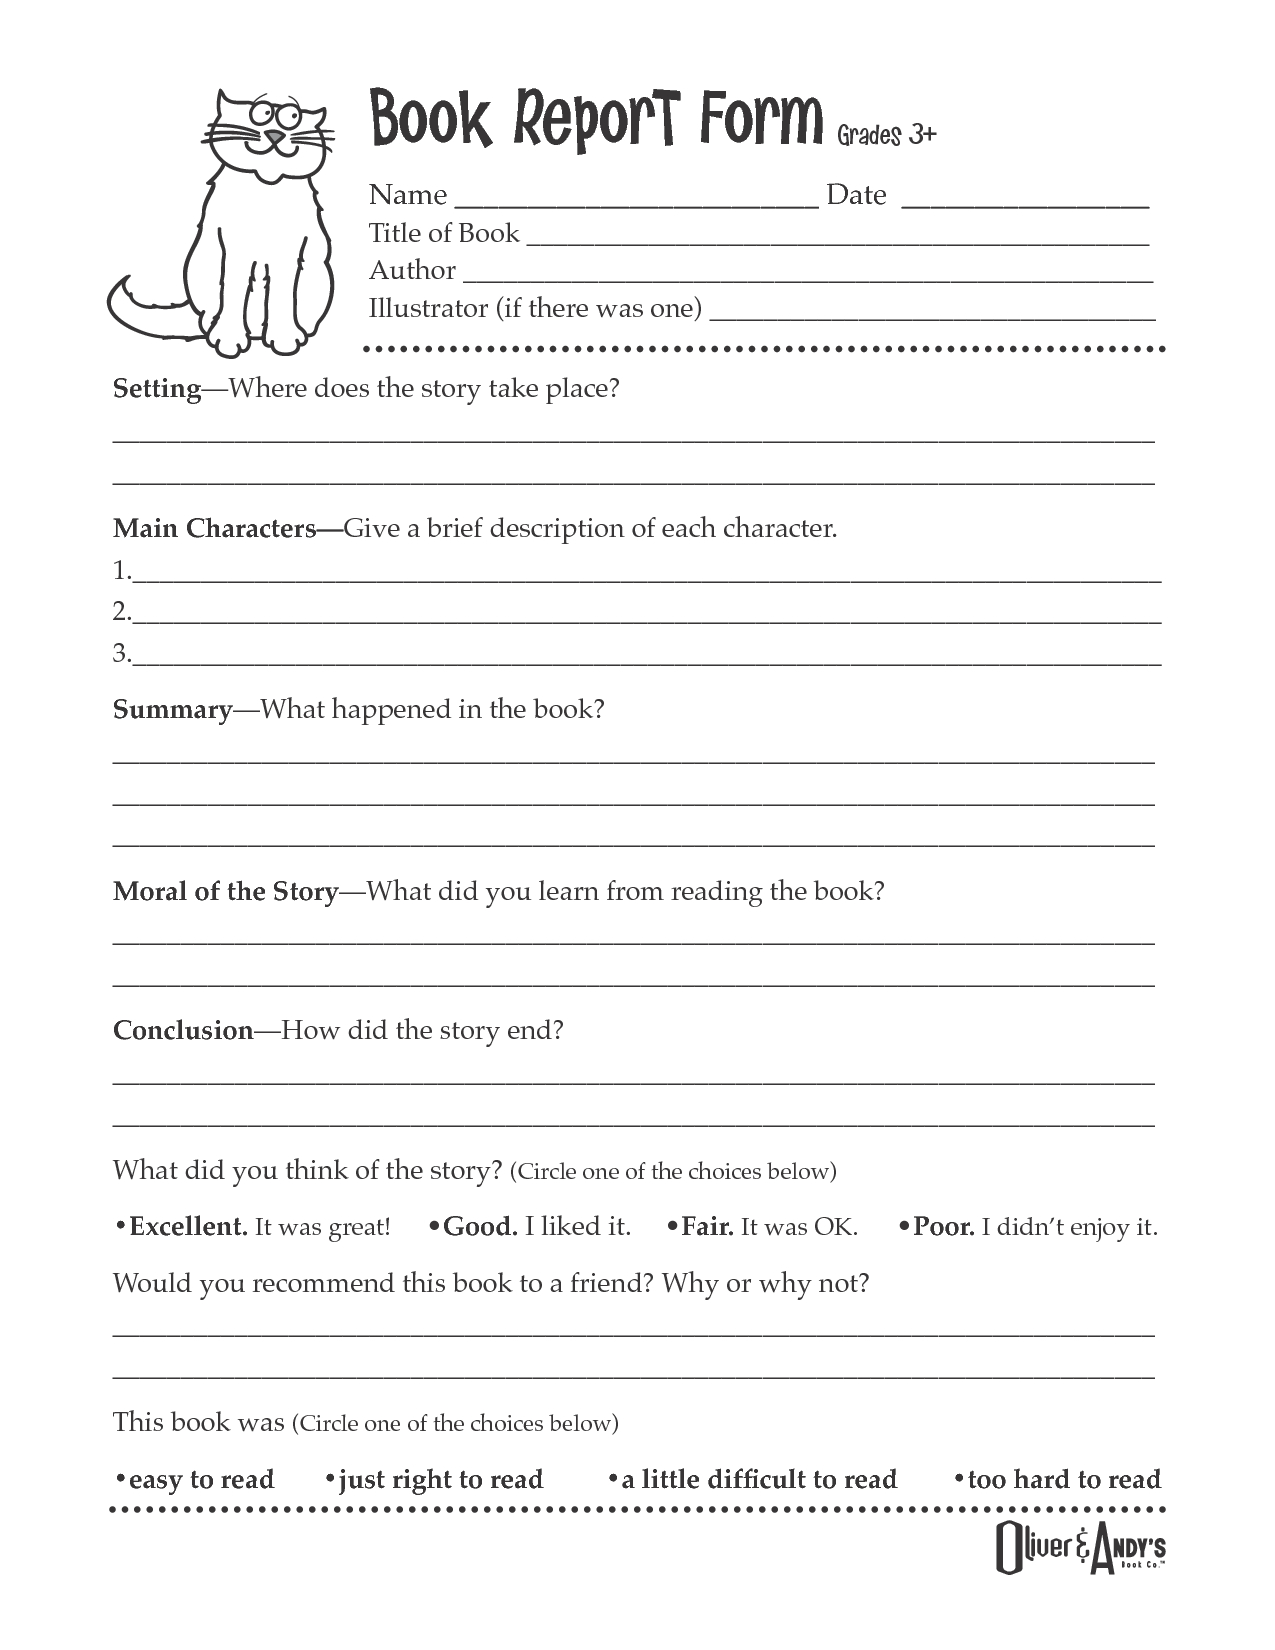 Second Grade Book Report Template | Book Report Form Grades Within 4Th Grade Book Report Template